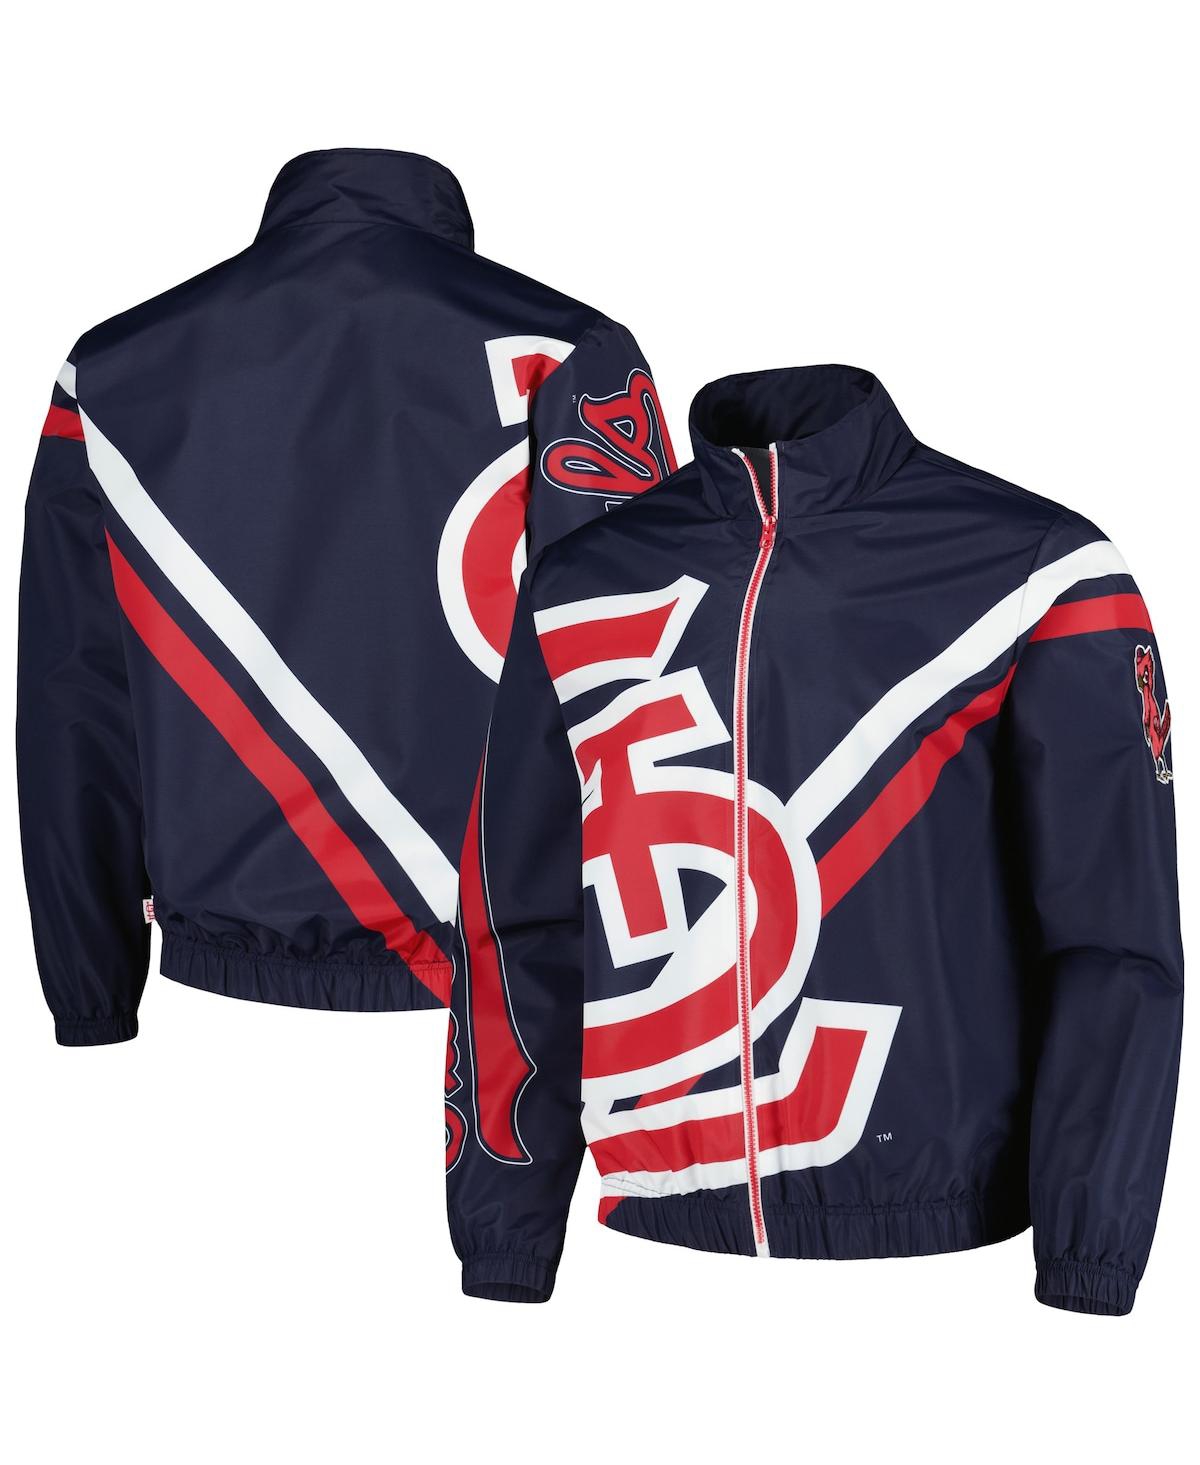 Men's Mitchell & Ness Navy St. Louis Cardinals Exploded Logo Warm Up Full-Zip Jacket - Navy